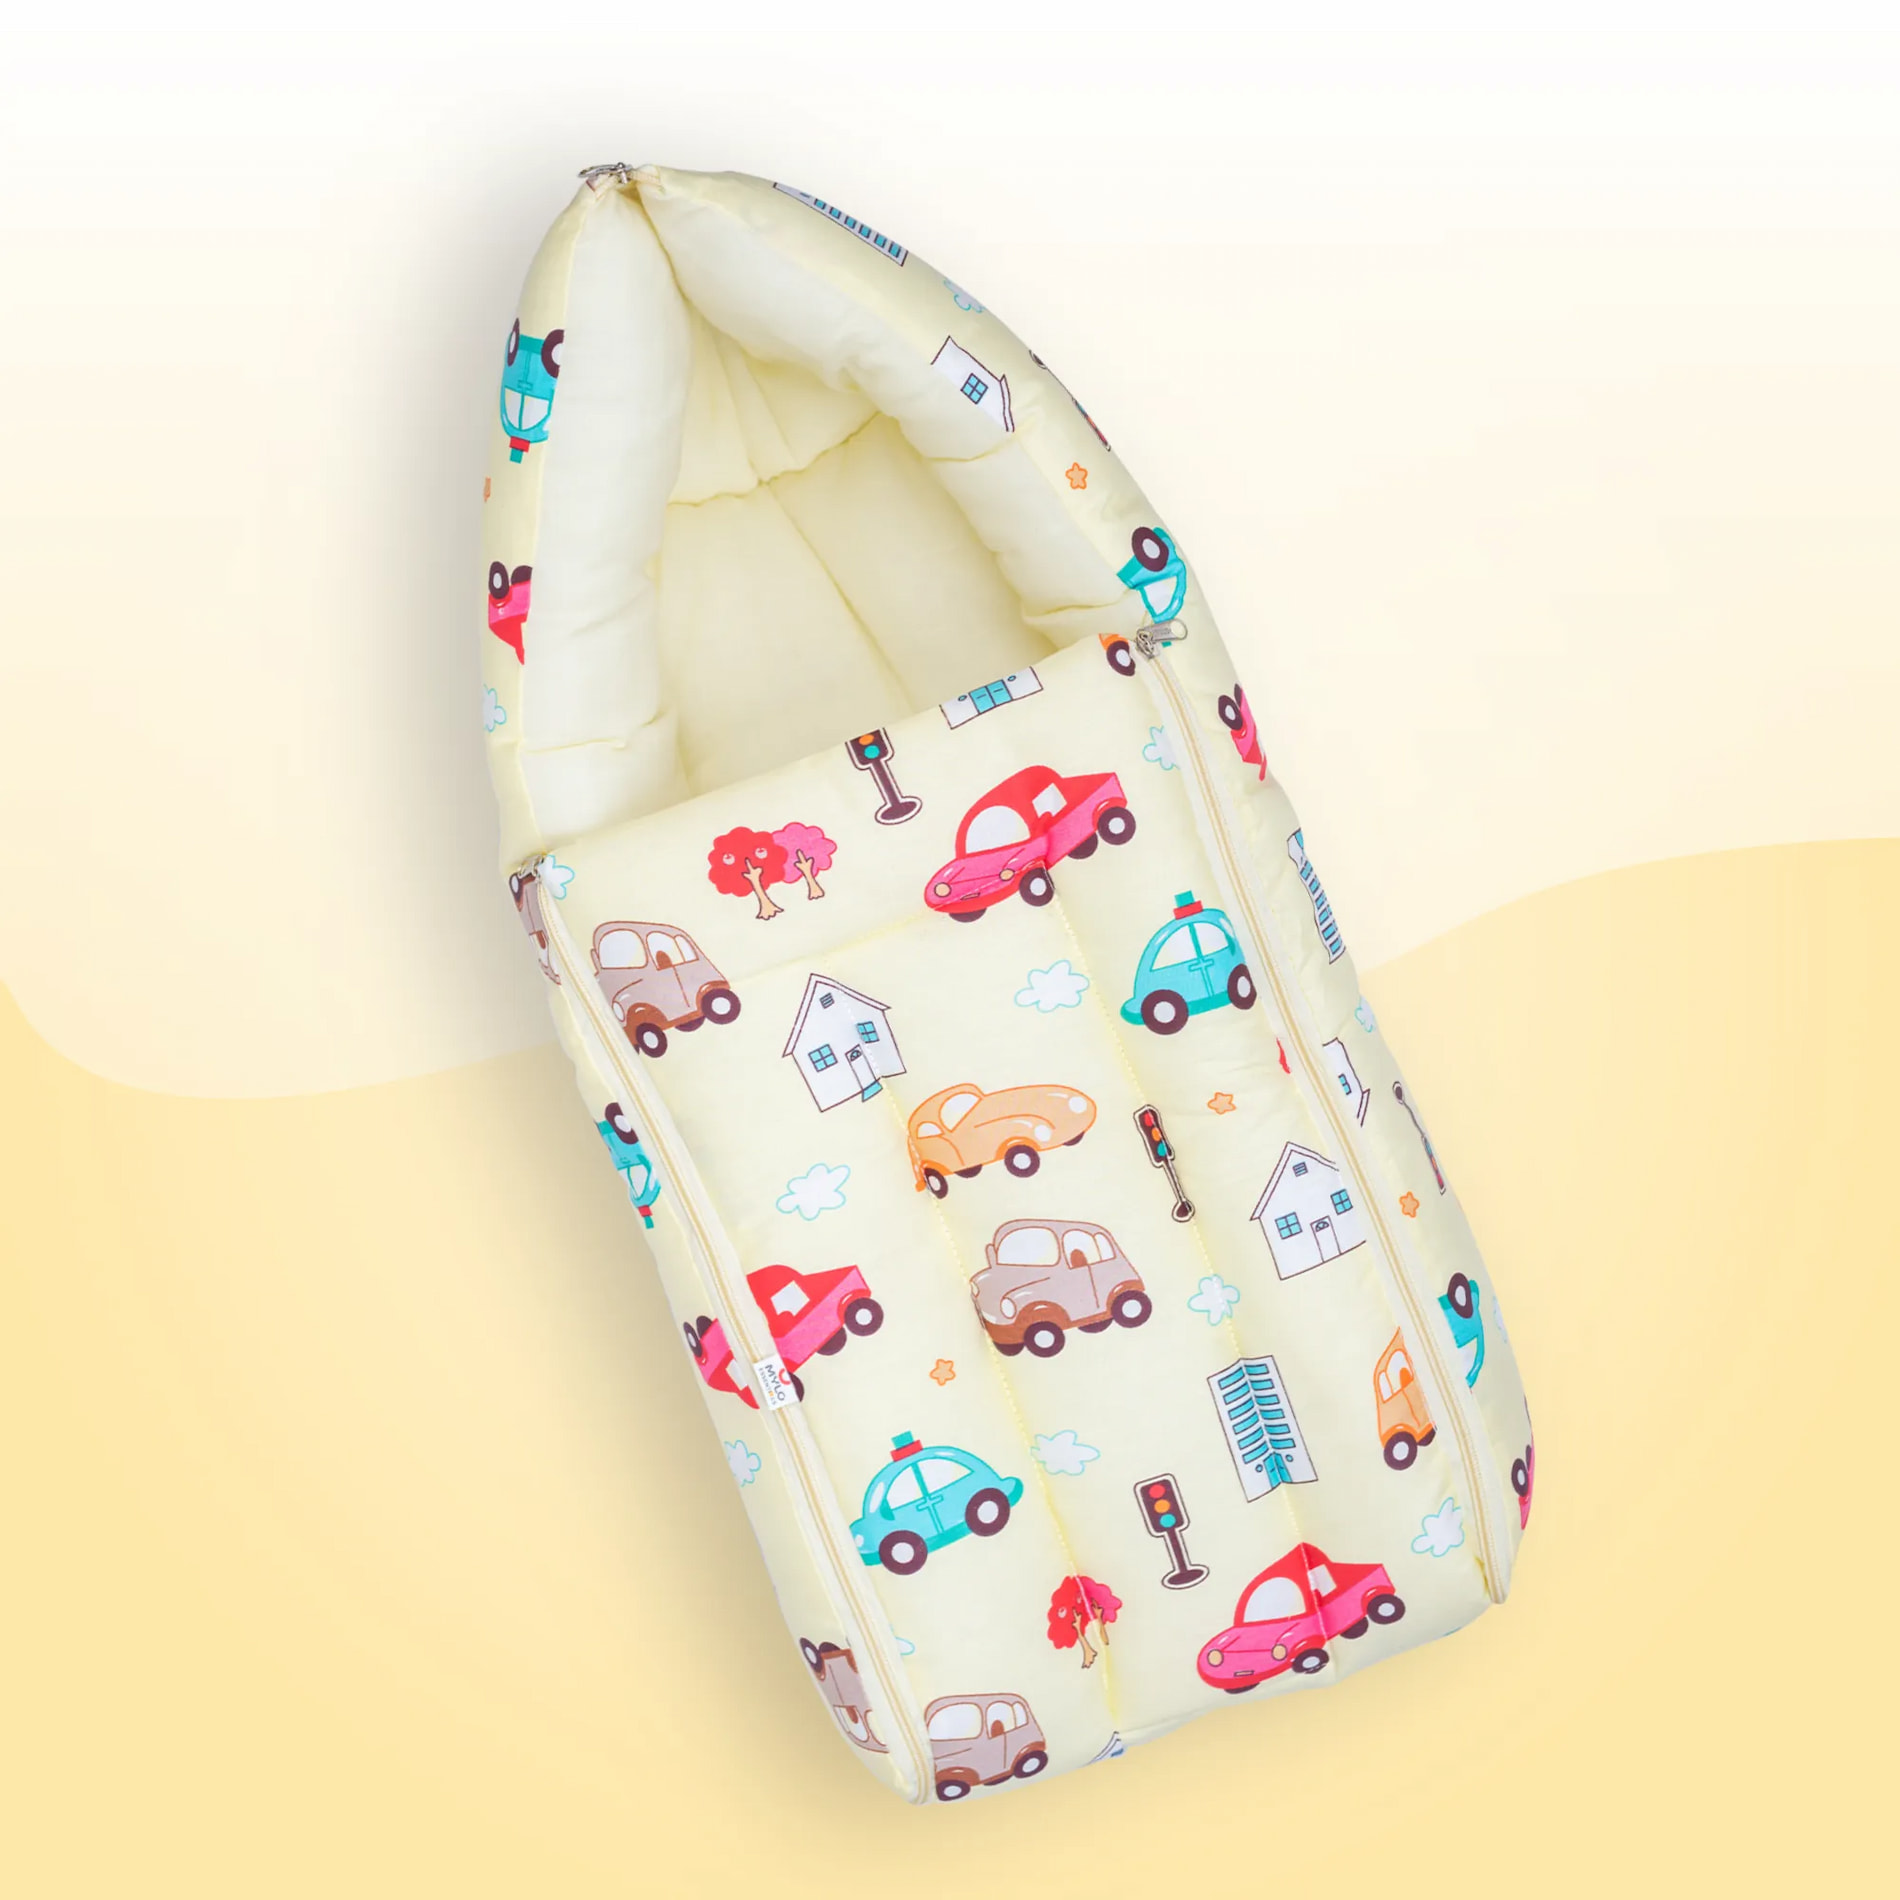 4-in-1 Soft & Snuggly Baby Sleeping Bag - Kids Car